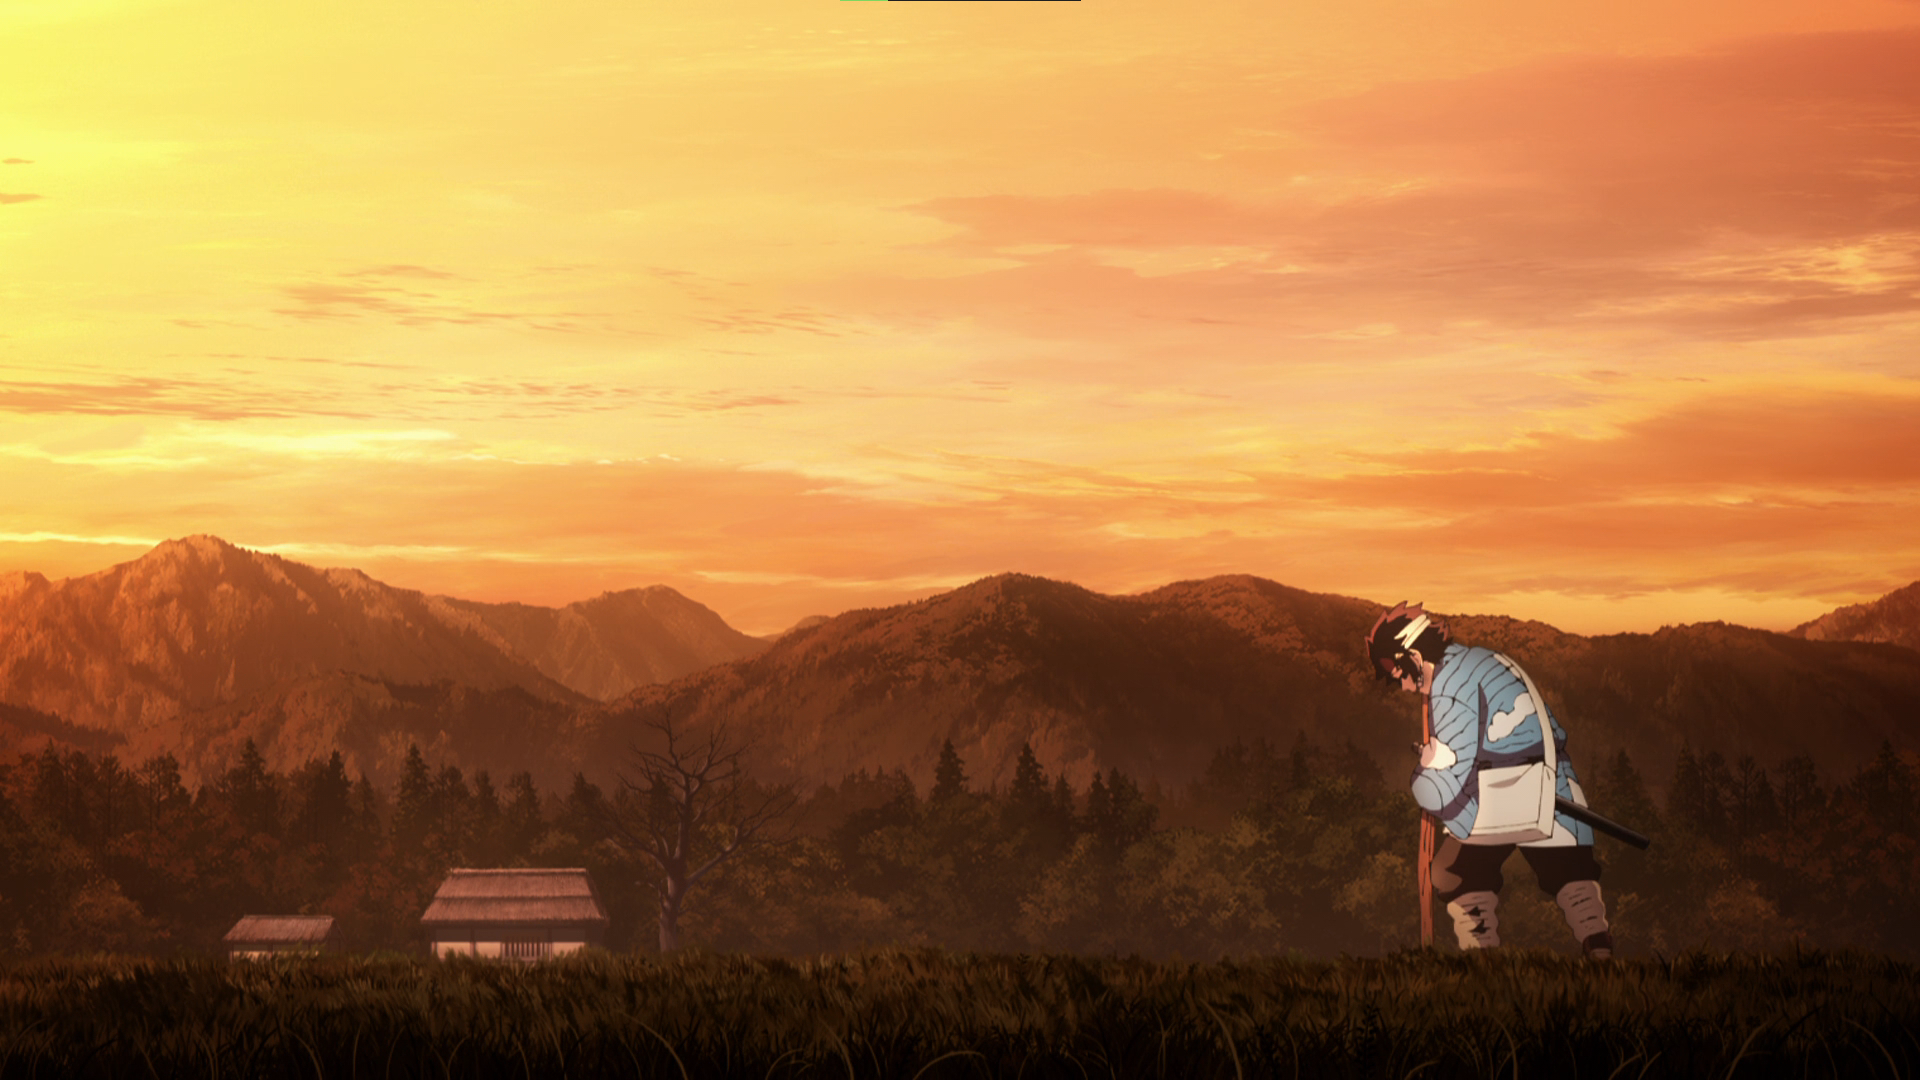 Anime 1920x1080 anime anime screenshot Kimetsu no Yaiba anime boys sword mountains sunset Kamado Tanjiro walking sunset glow sky clouds kimono standing